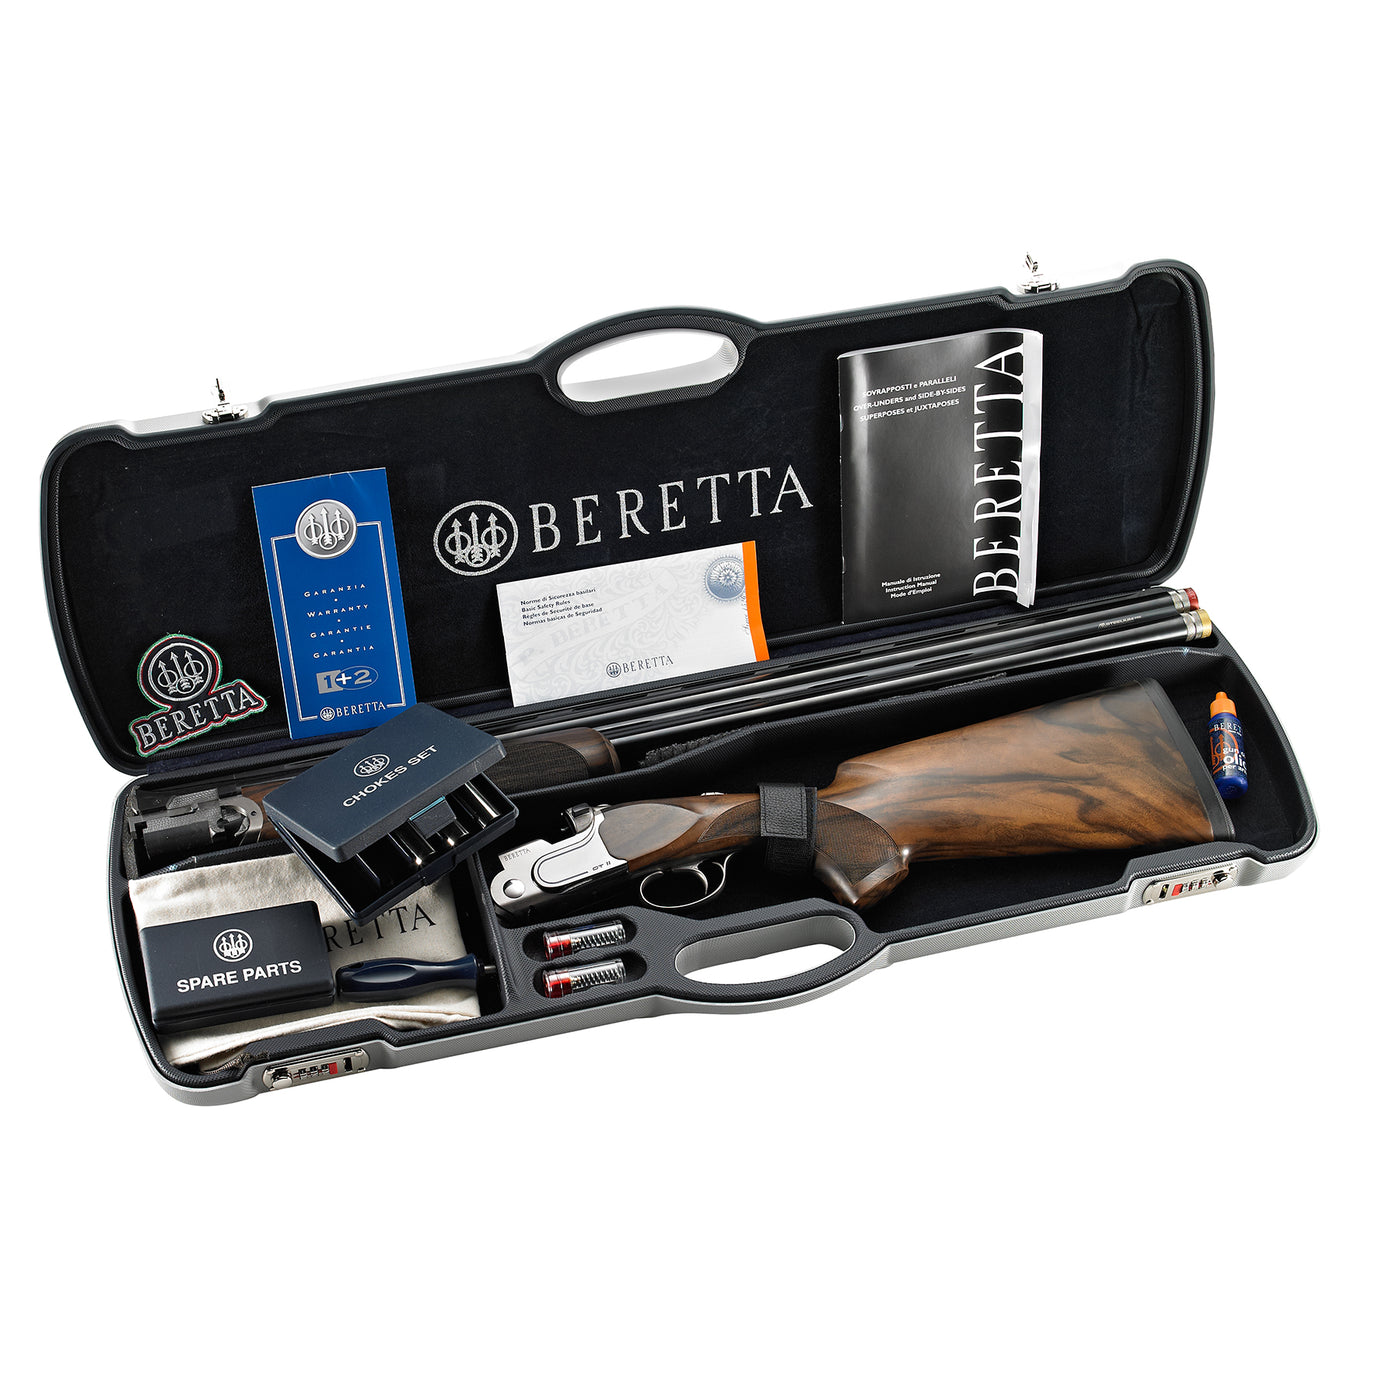 Beretta DT11 sporting over and under shotgun case open